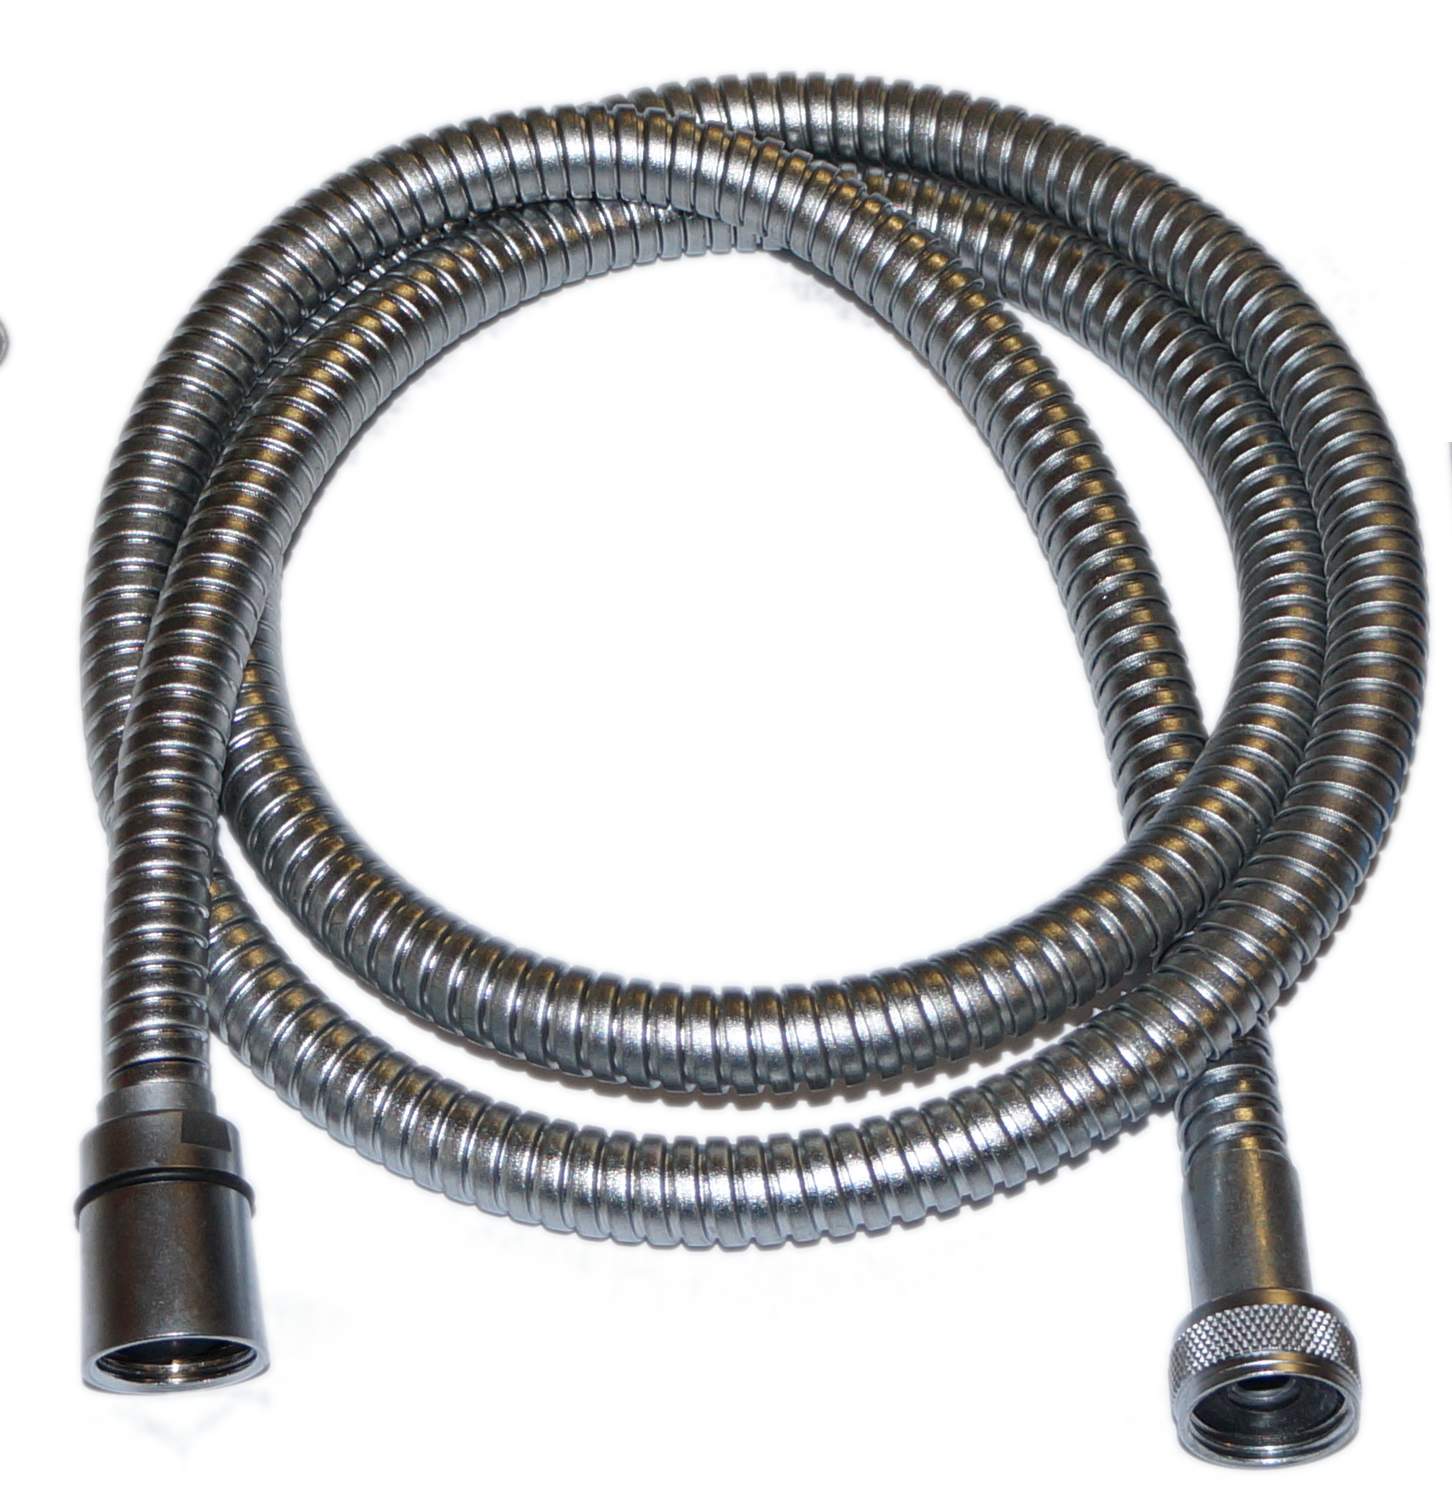 1.5 m satin chrome brass double clamp shower hose